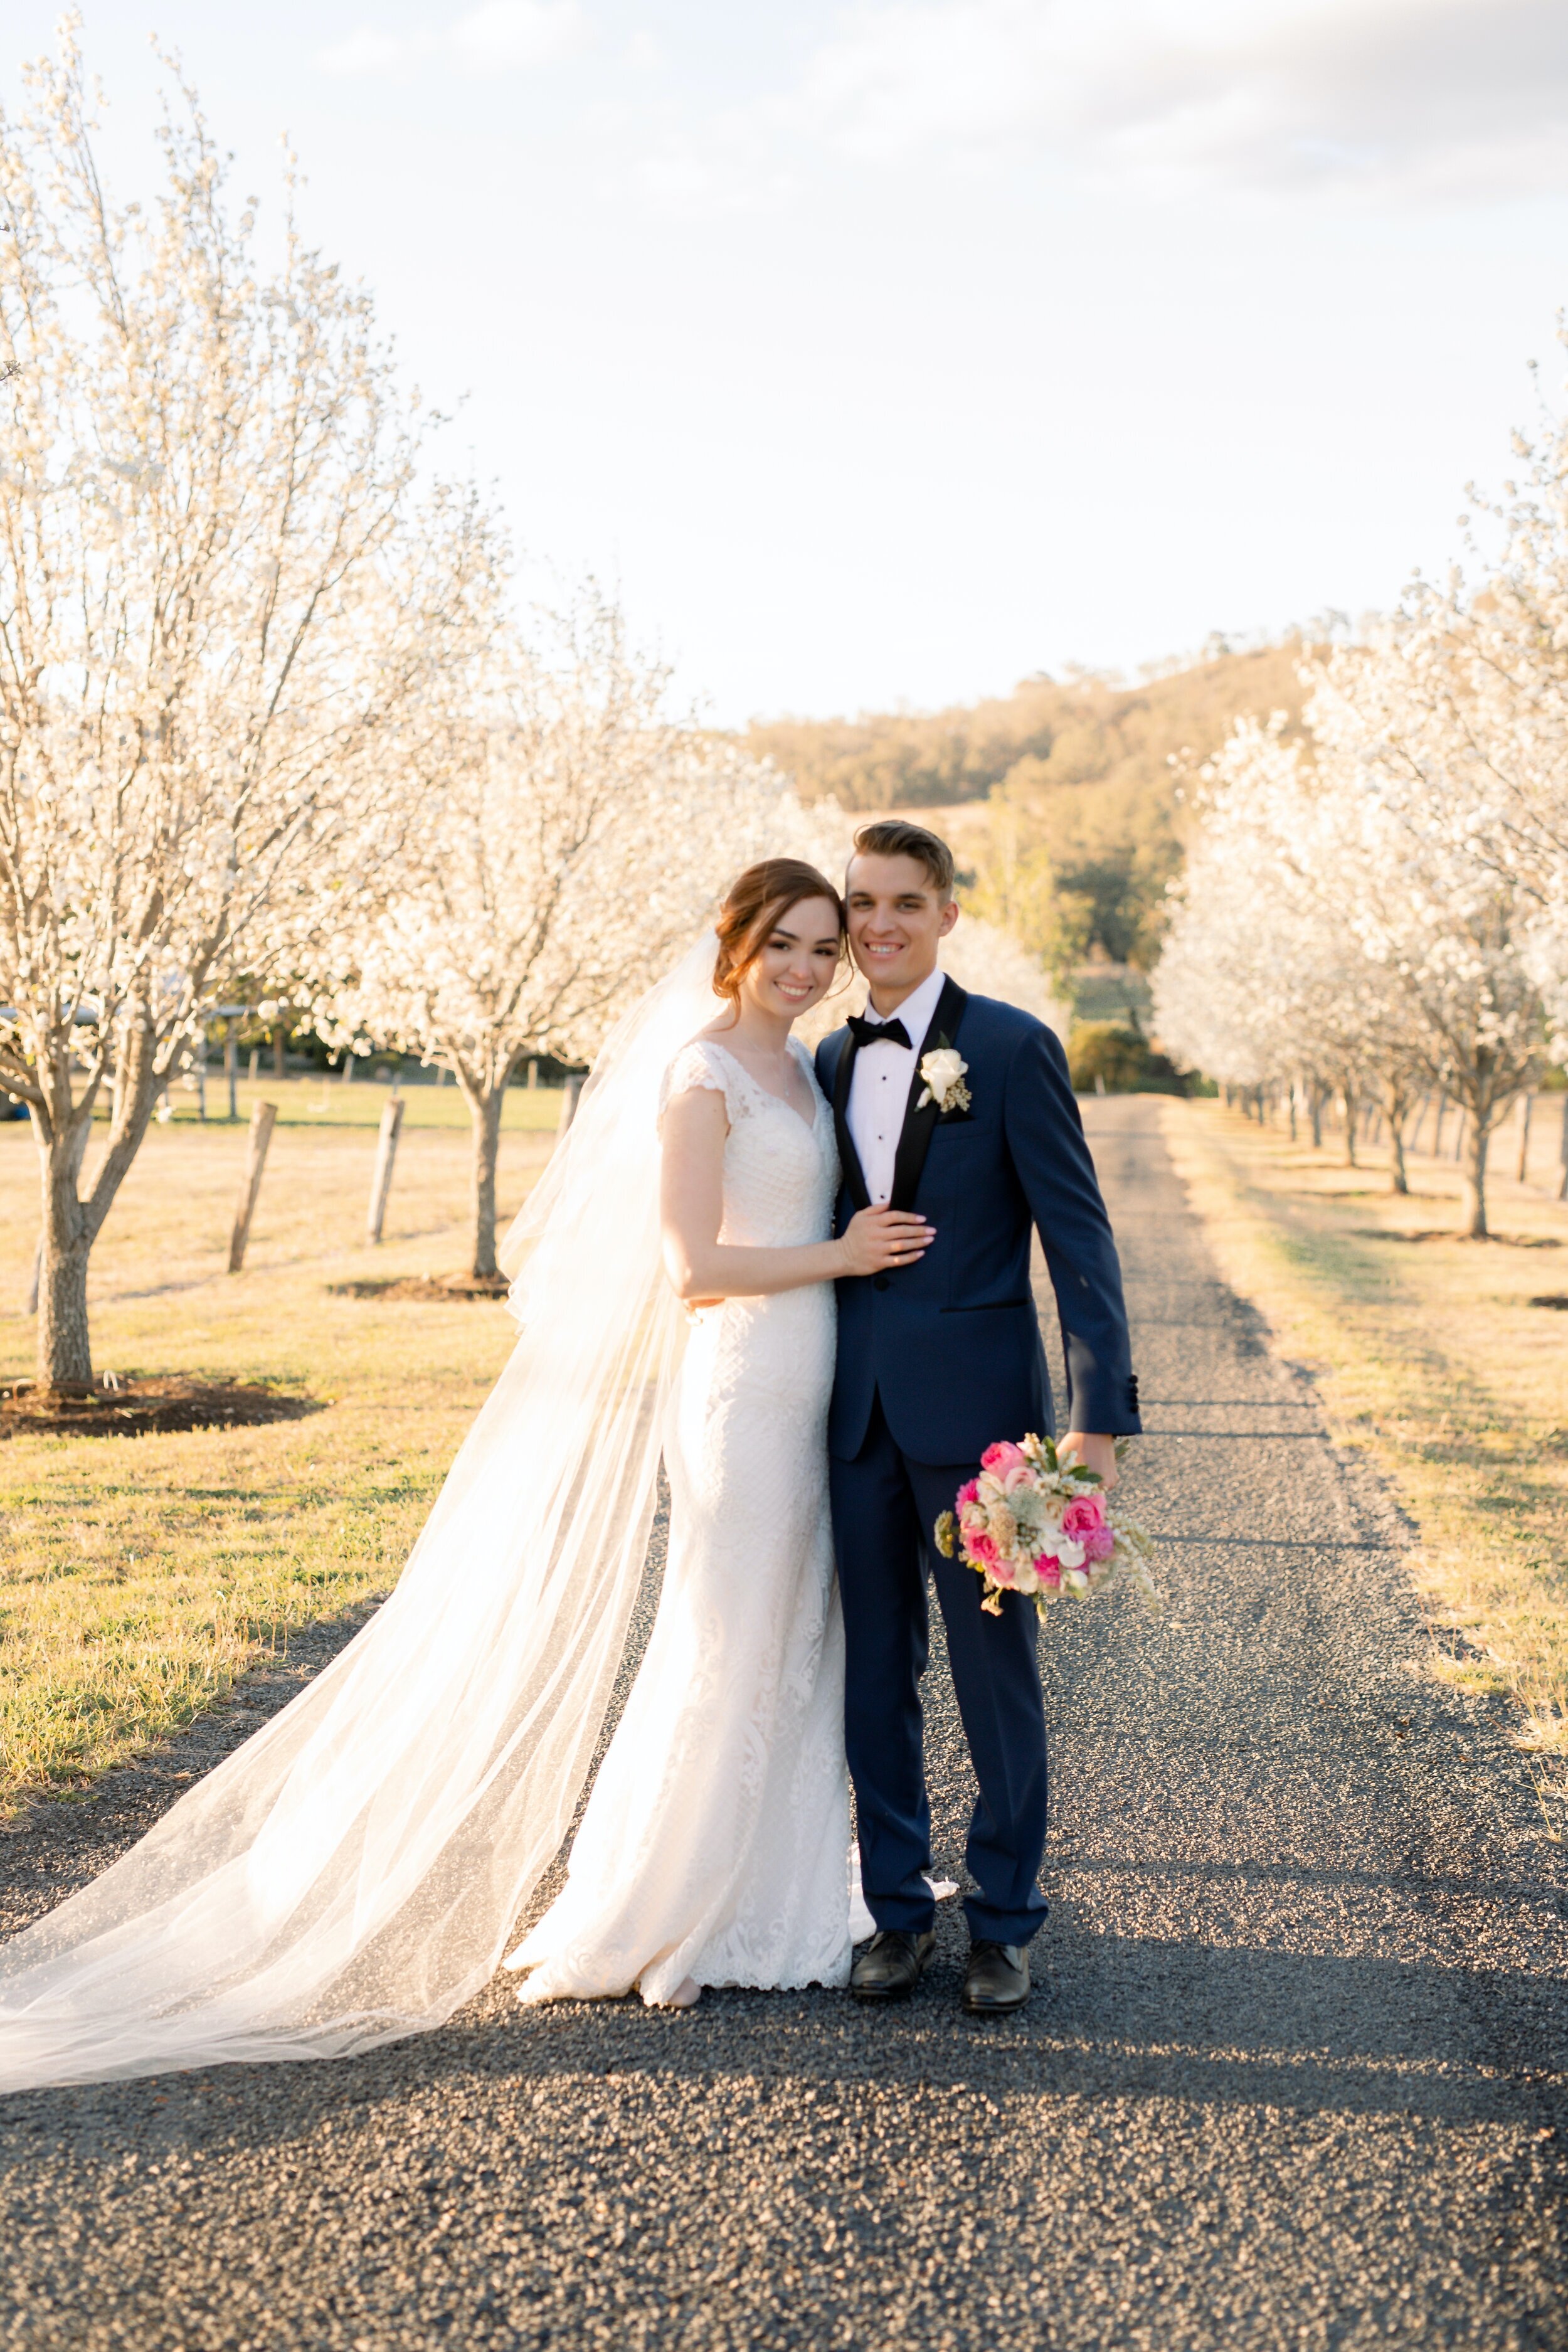 Toowoomba wedding Bride and Groom among the blossom trees